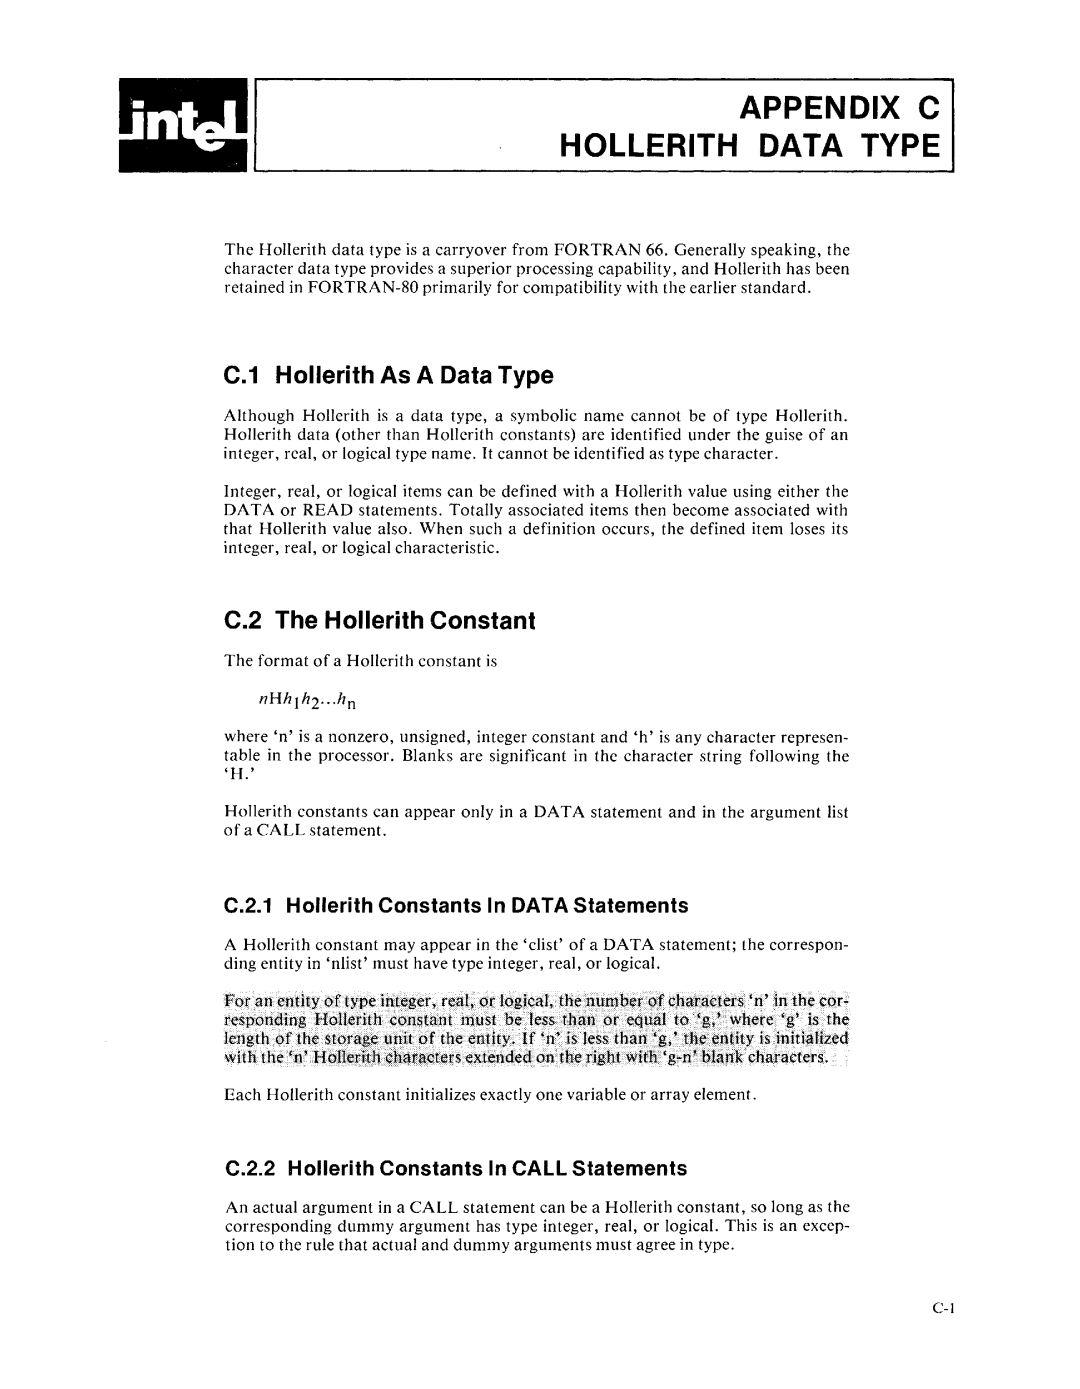 Intel fortran-80 manual Appendix C Hollerith Data Type, C.1 Hollerith As A Data Type, C.2 The Hollerith Constant 